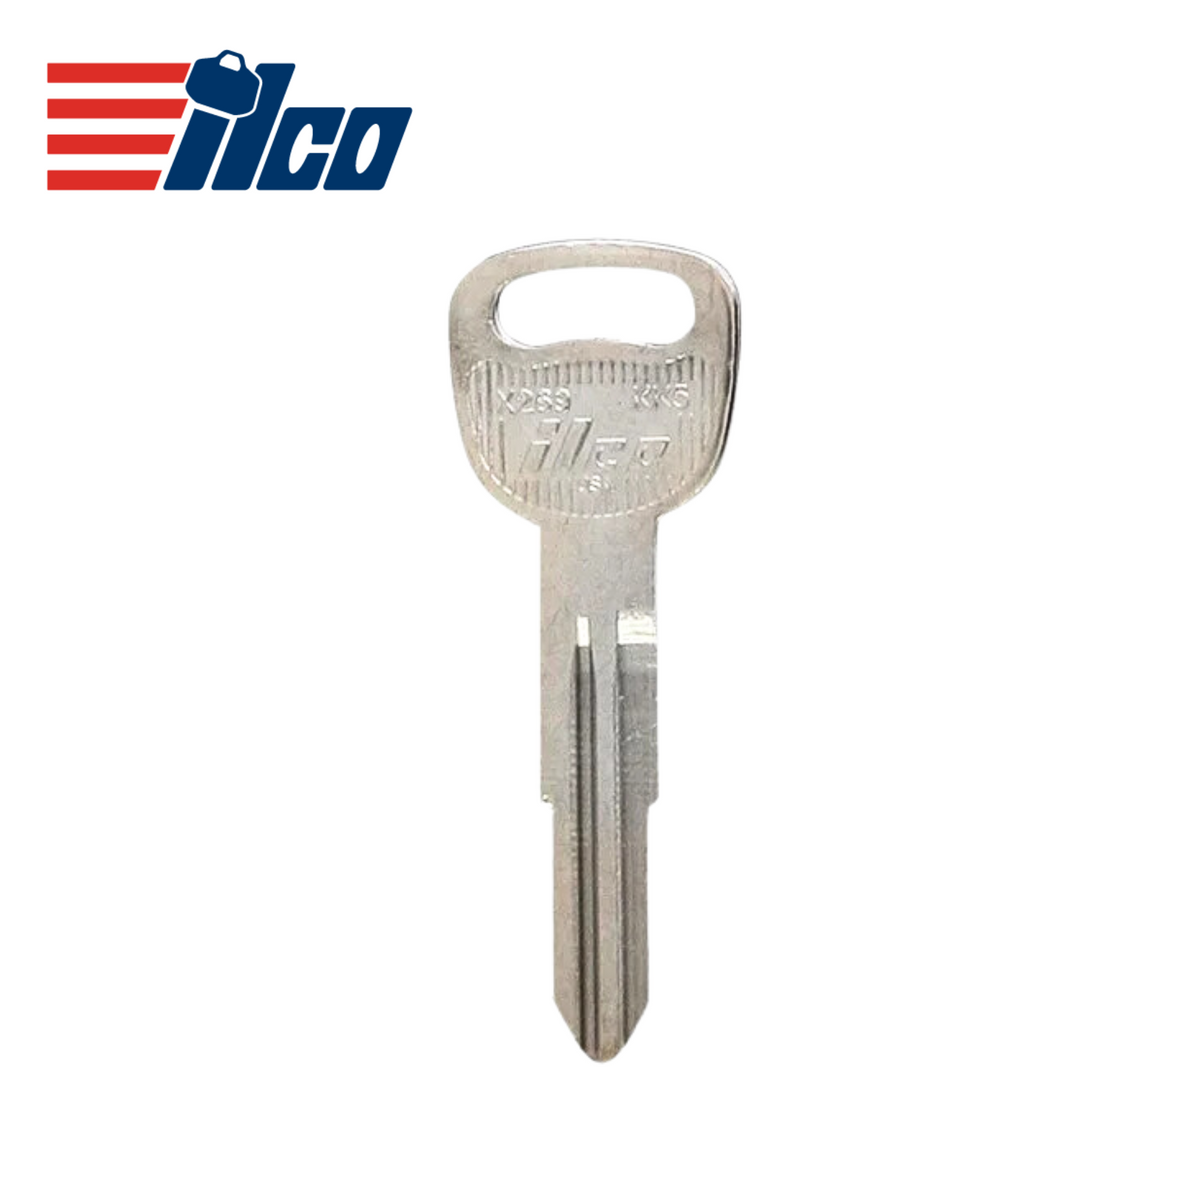 Kia - ILCO Metal Test Key KK5/X269 - Royal Key Supply